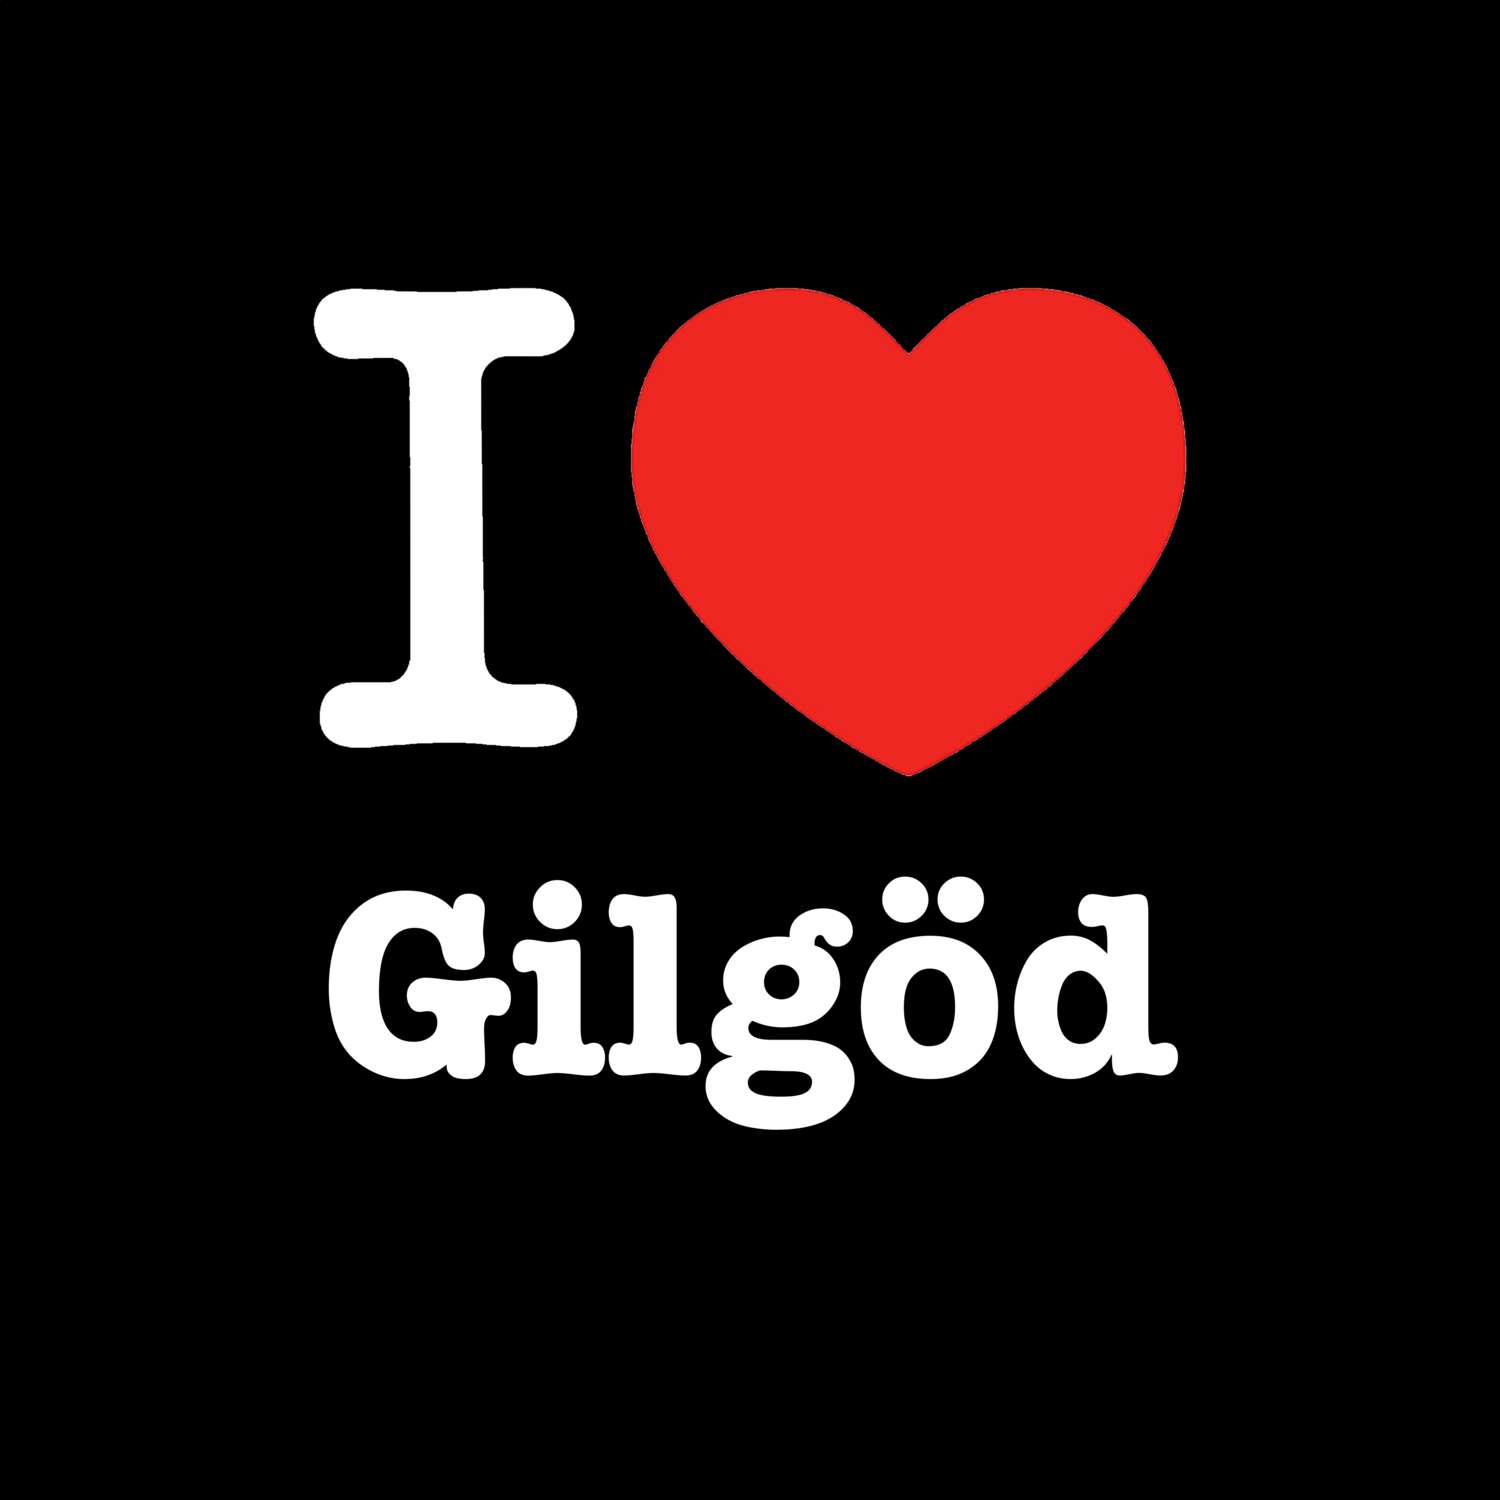 Gilgöd T-Shirt »I love«